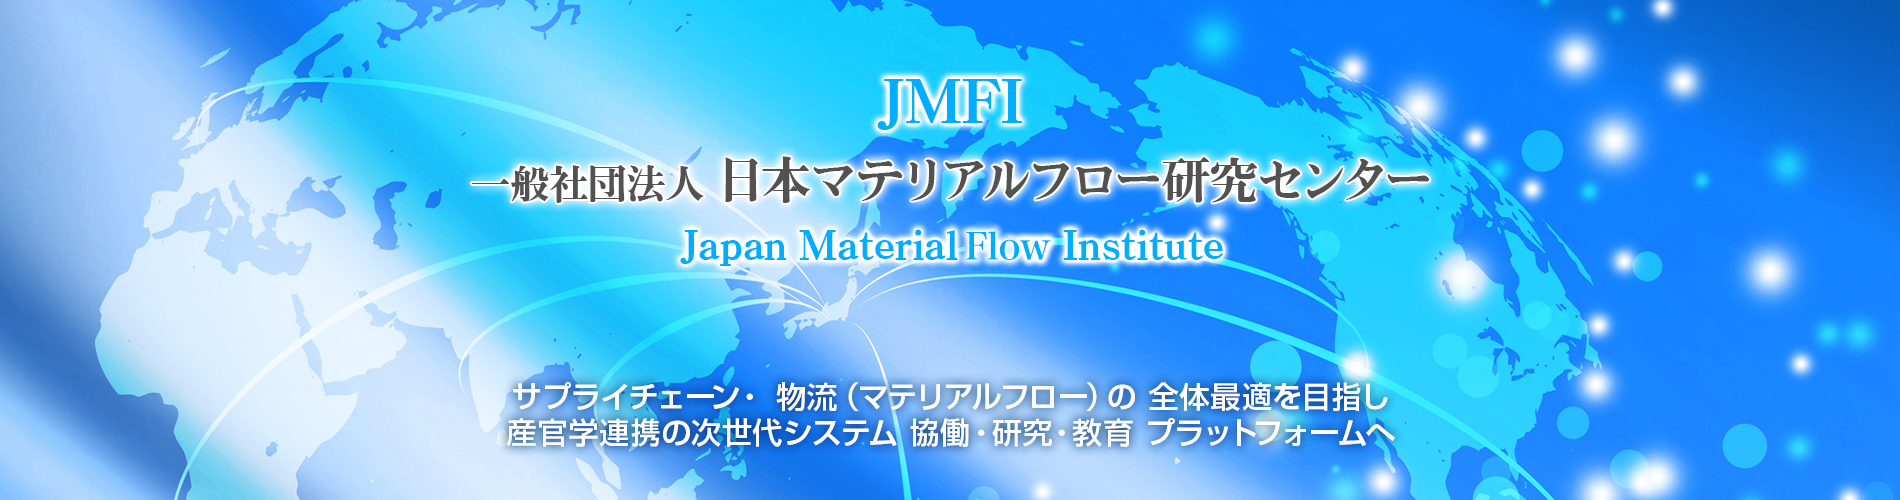 [JMFI]一般社団法人日本マテリアルフロー研究センター